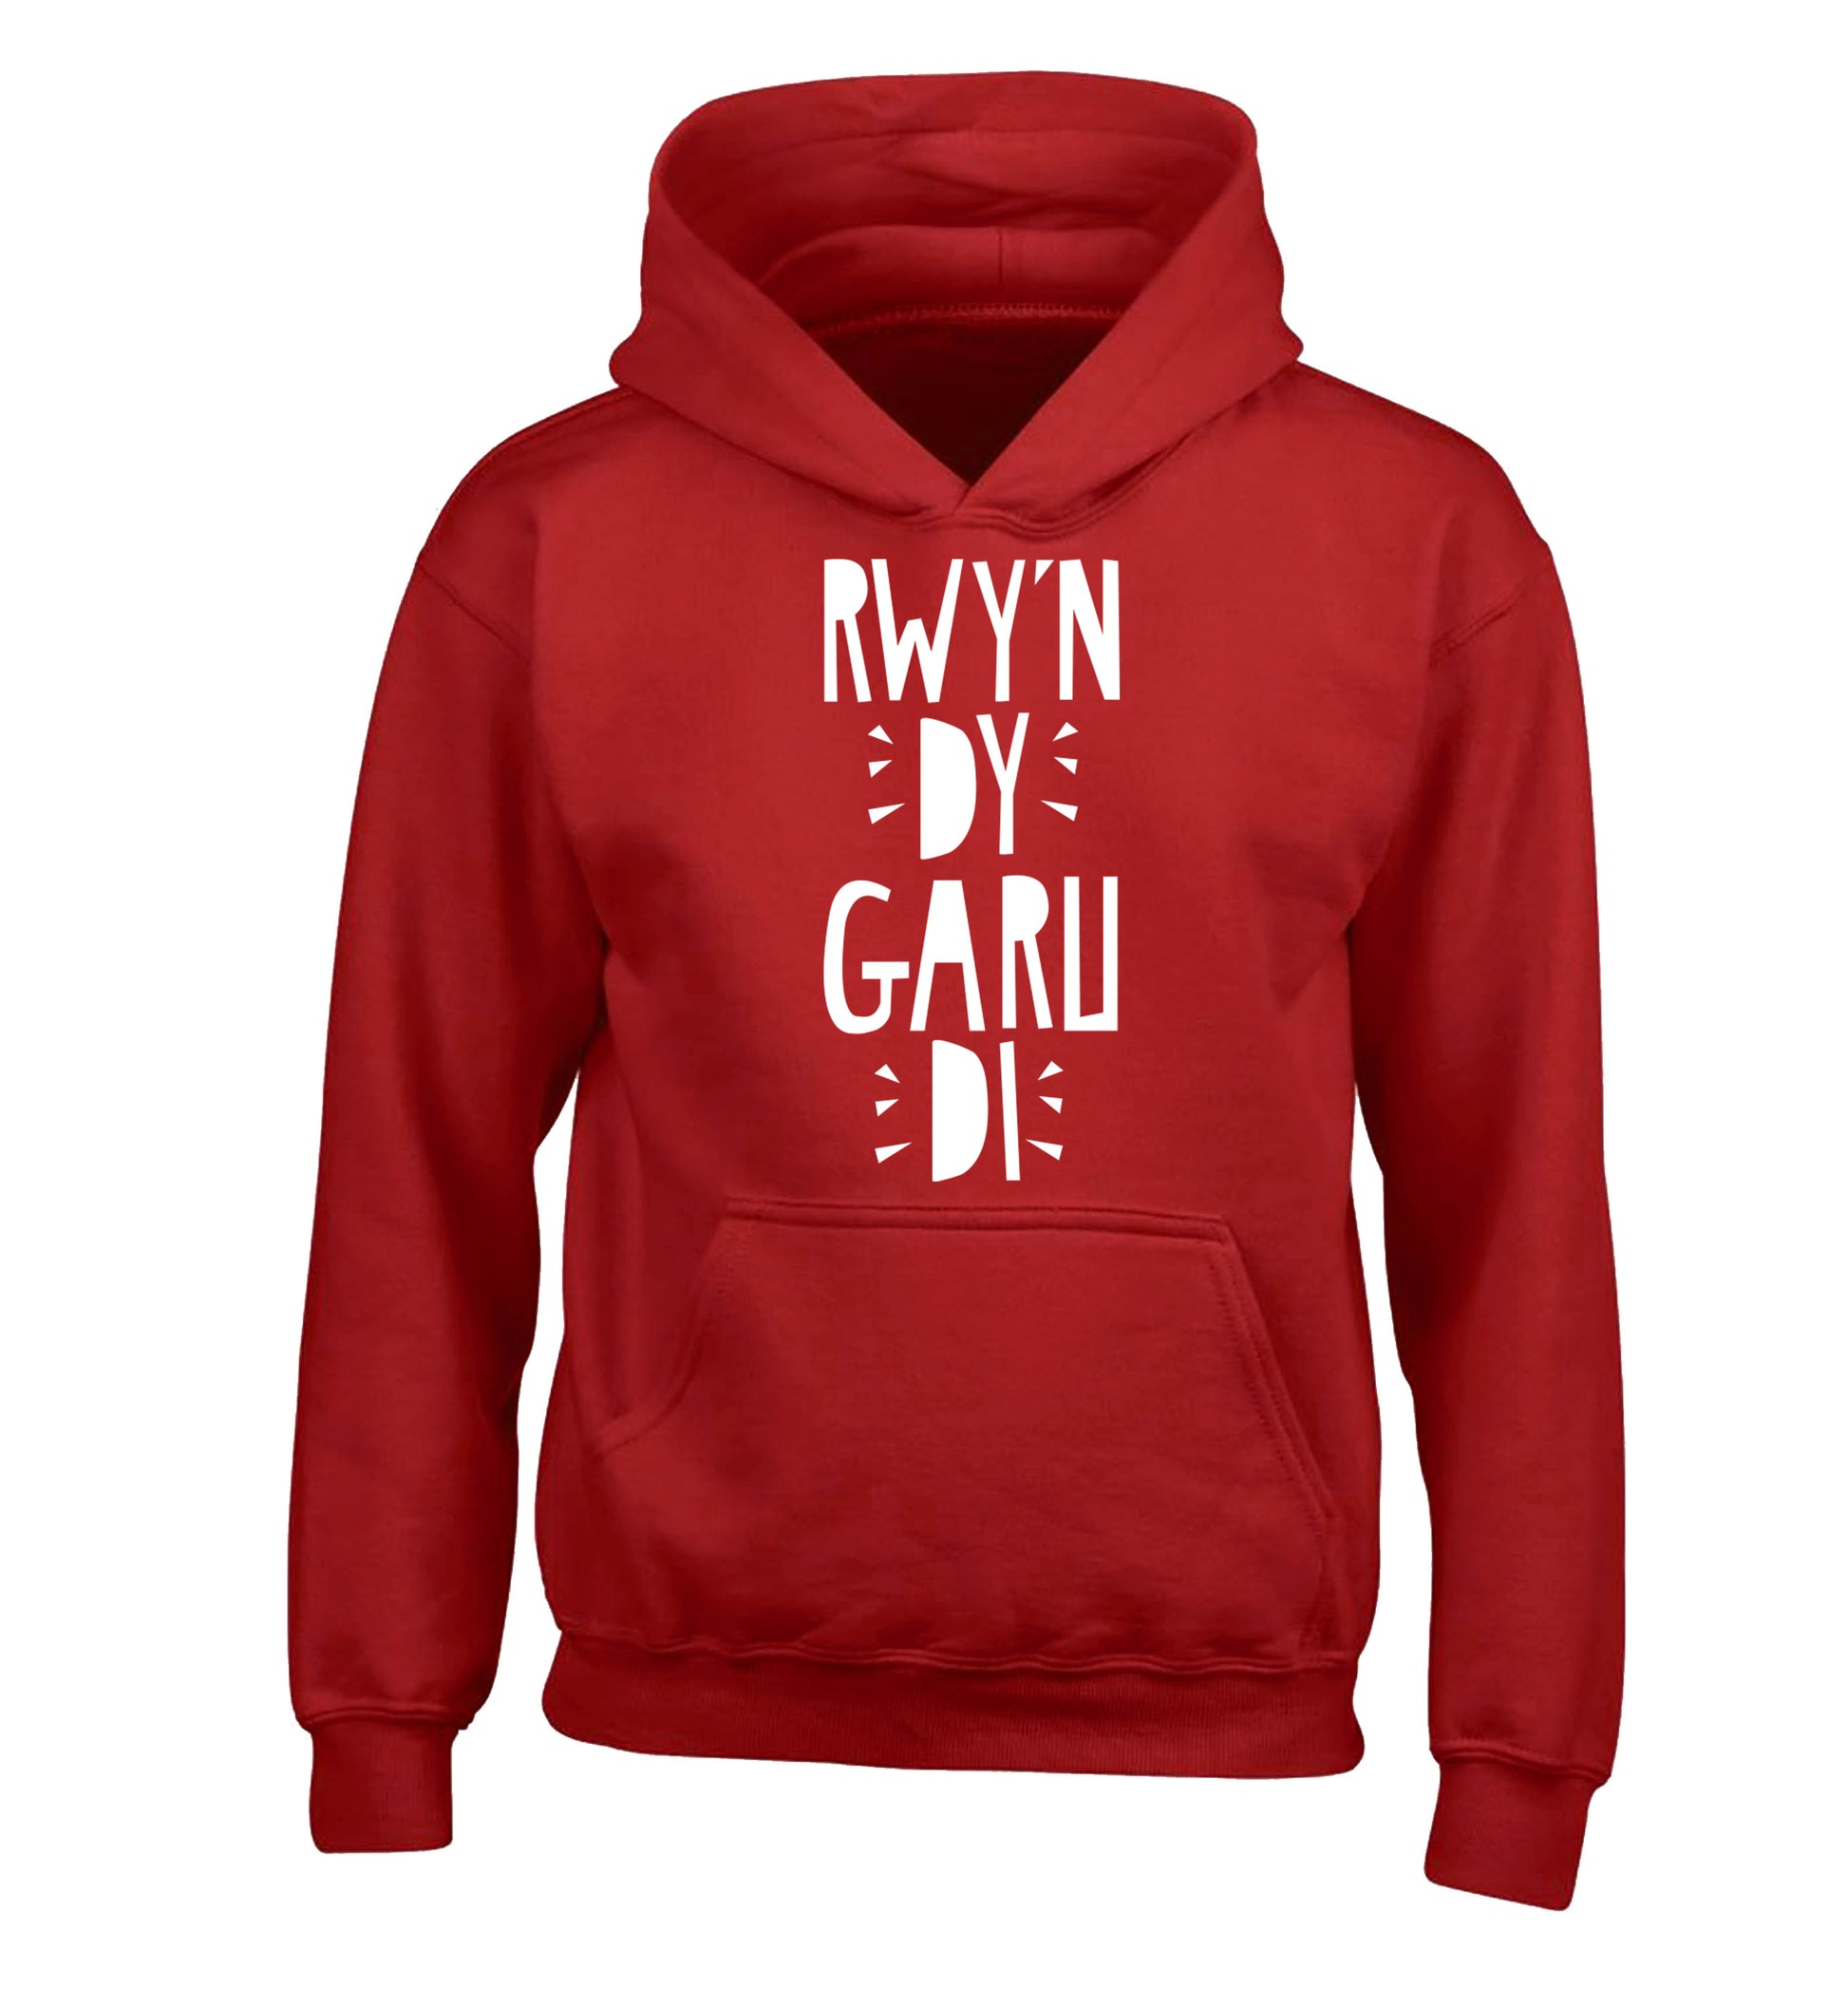 Rwy'n dy garu di - I love you children's red hoodie 12-13 Years